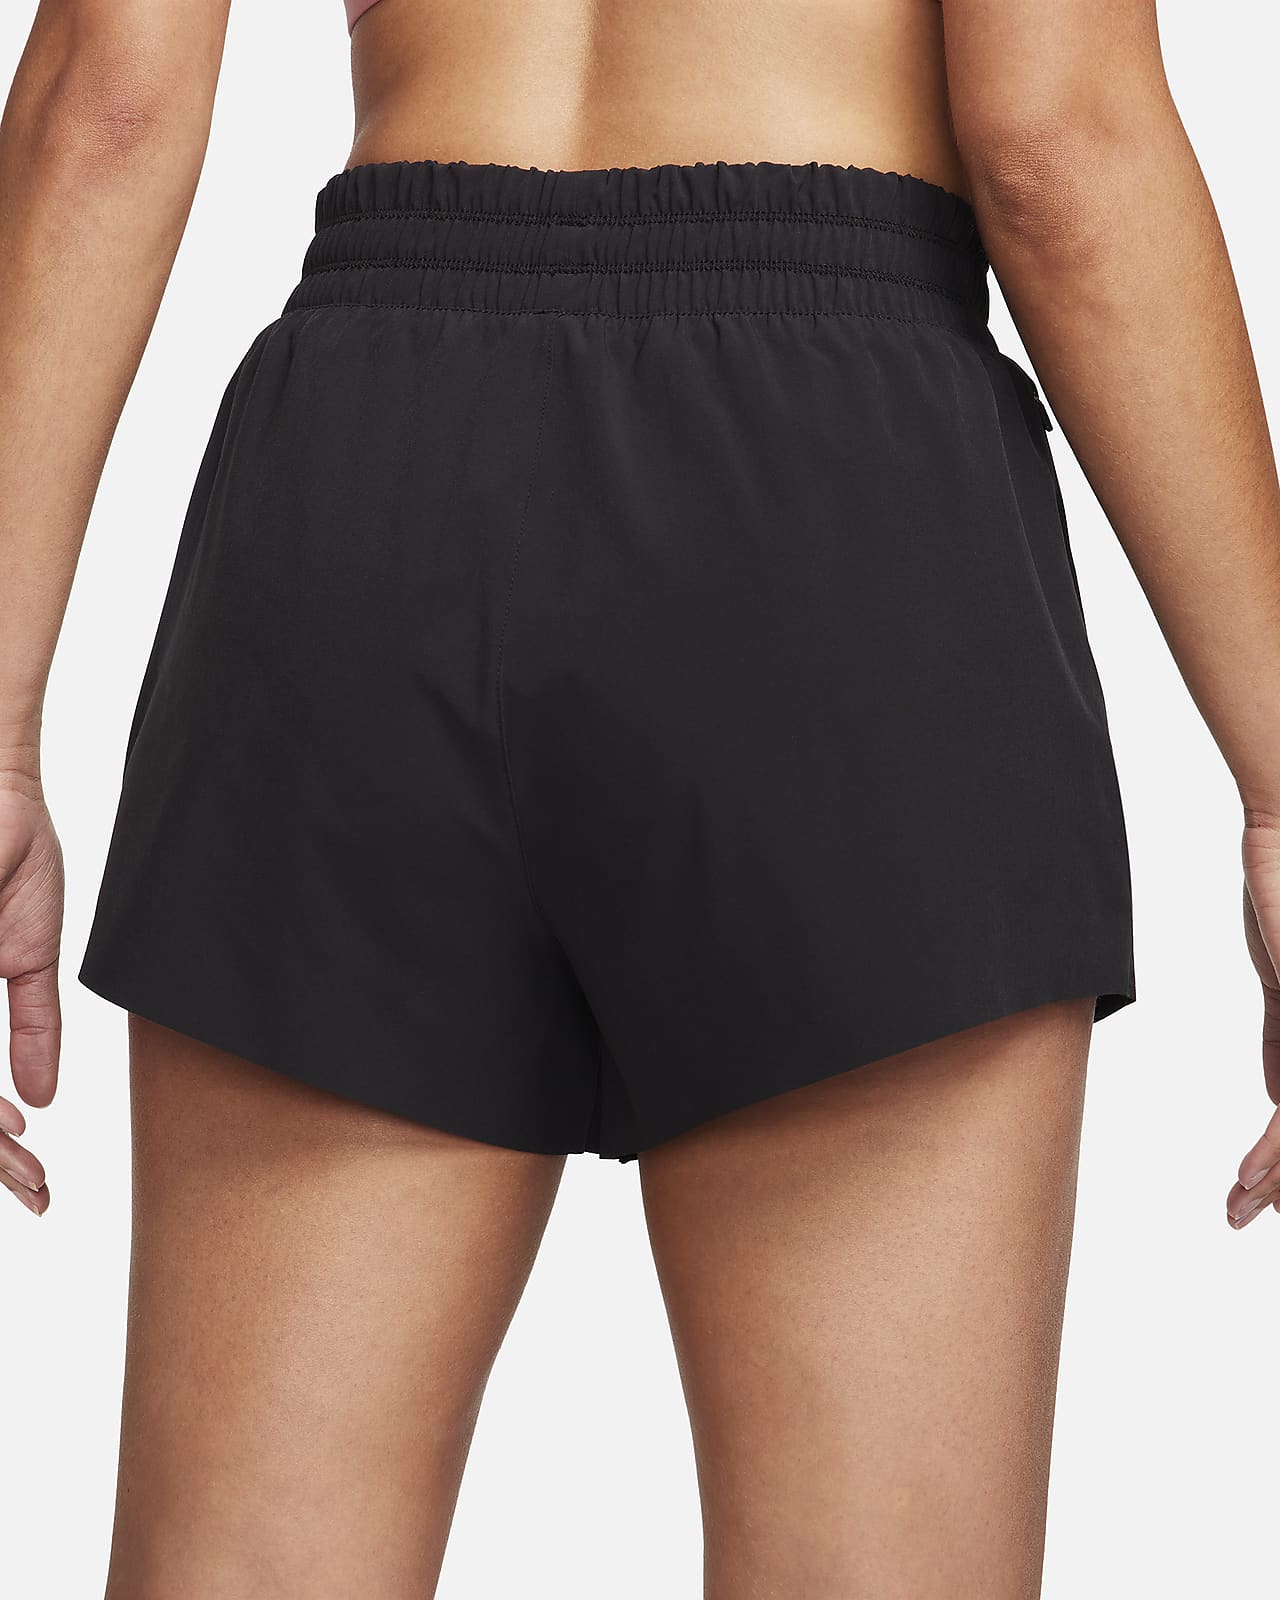 Nike Relay Capri Leggings Womens Small Black Triangle Print Dri Fit Running